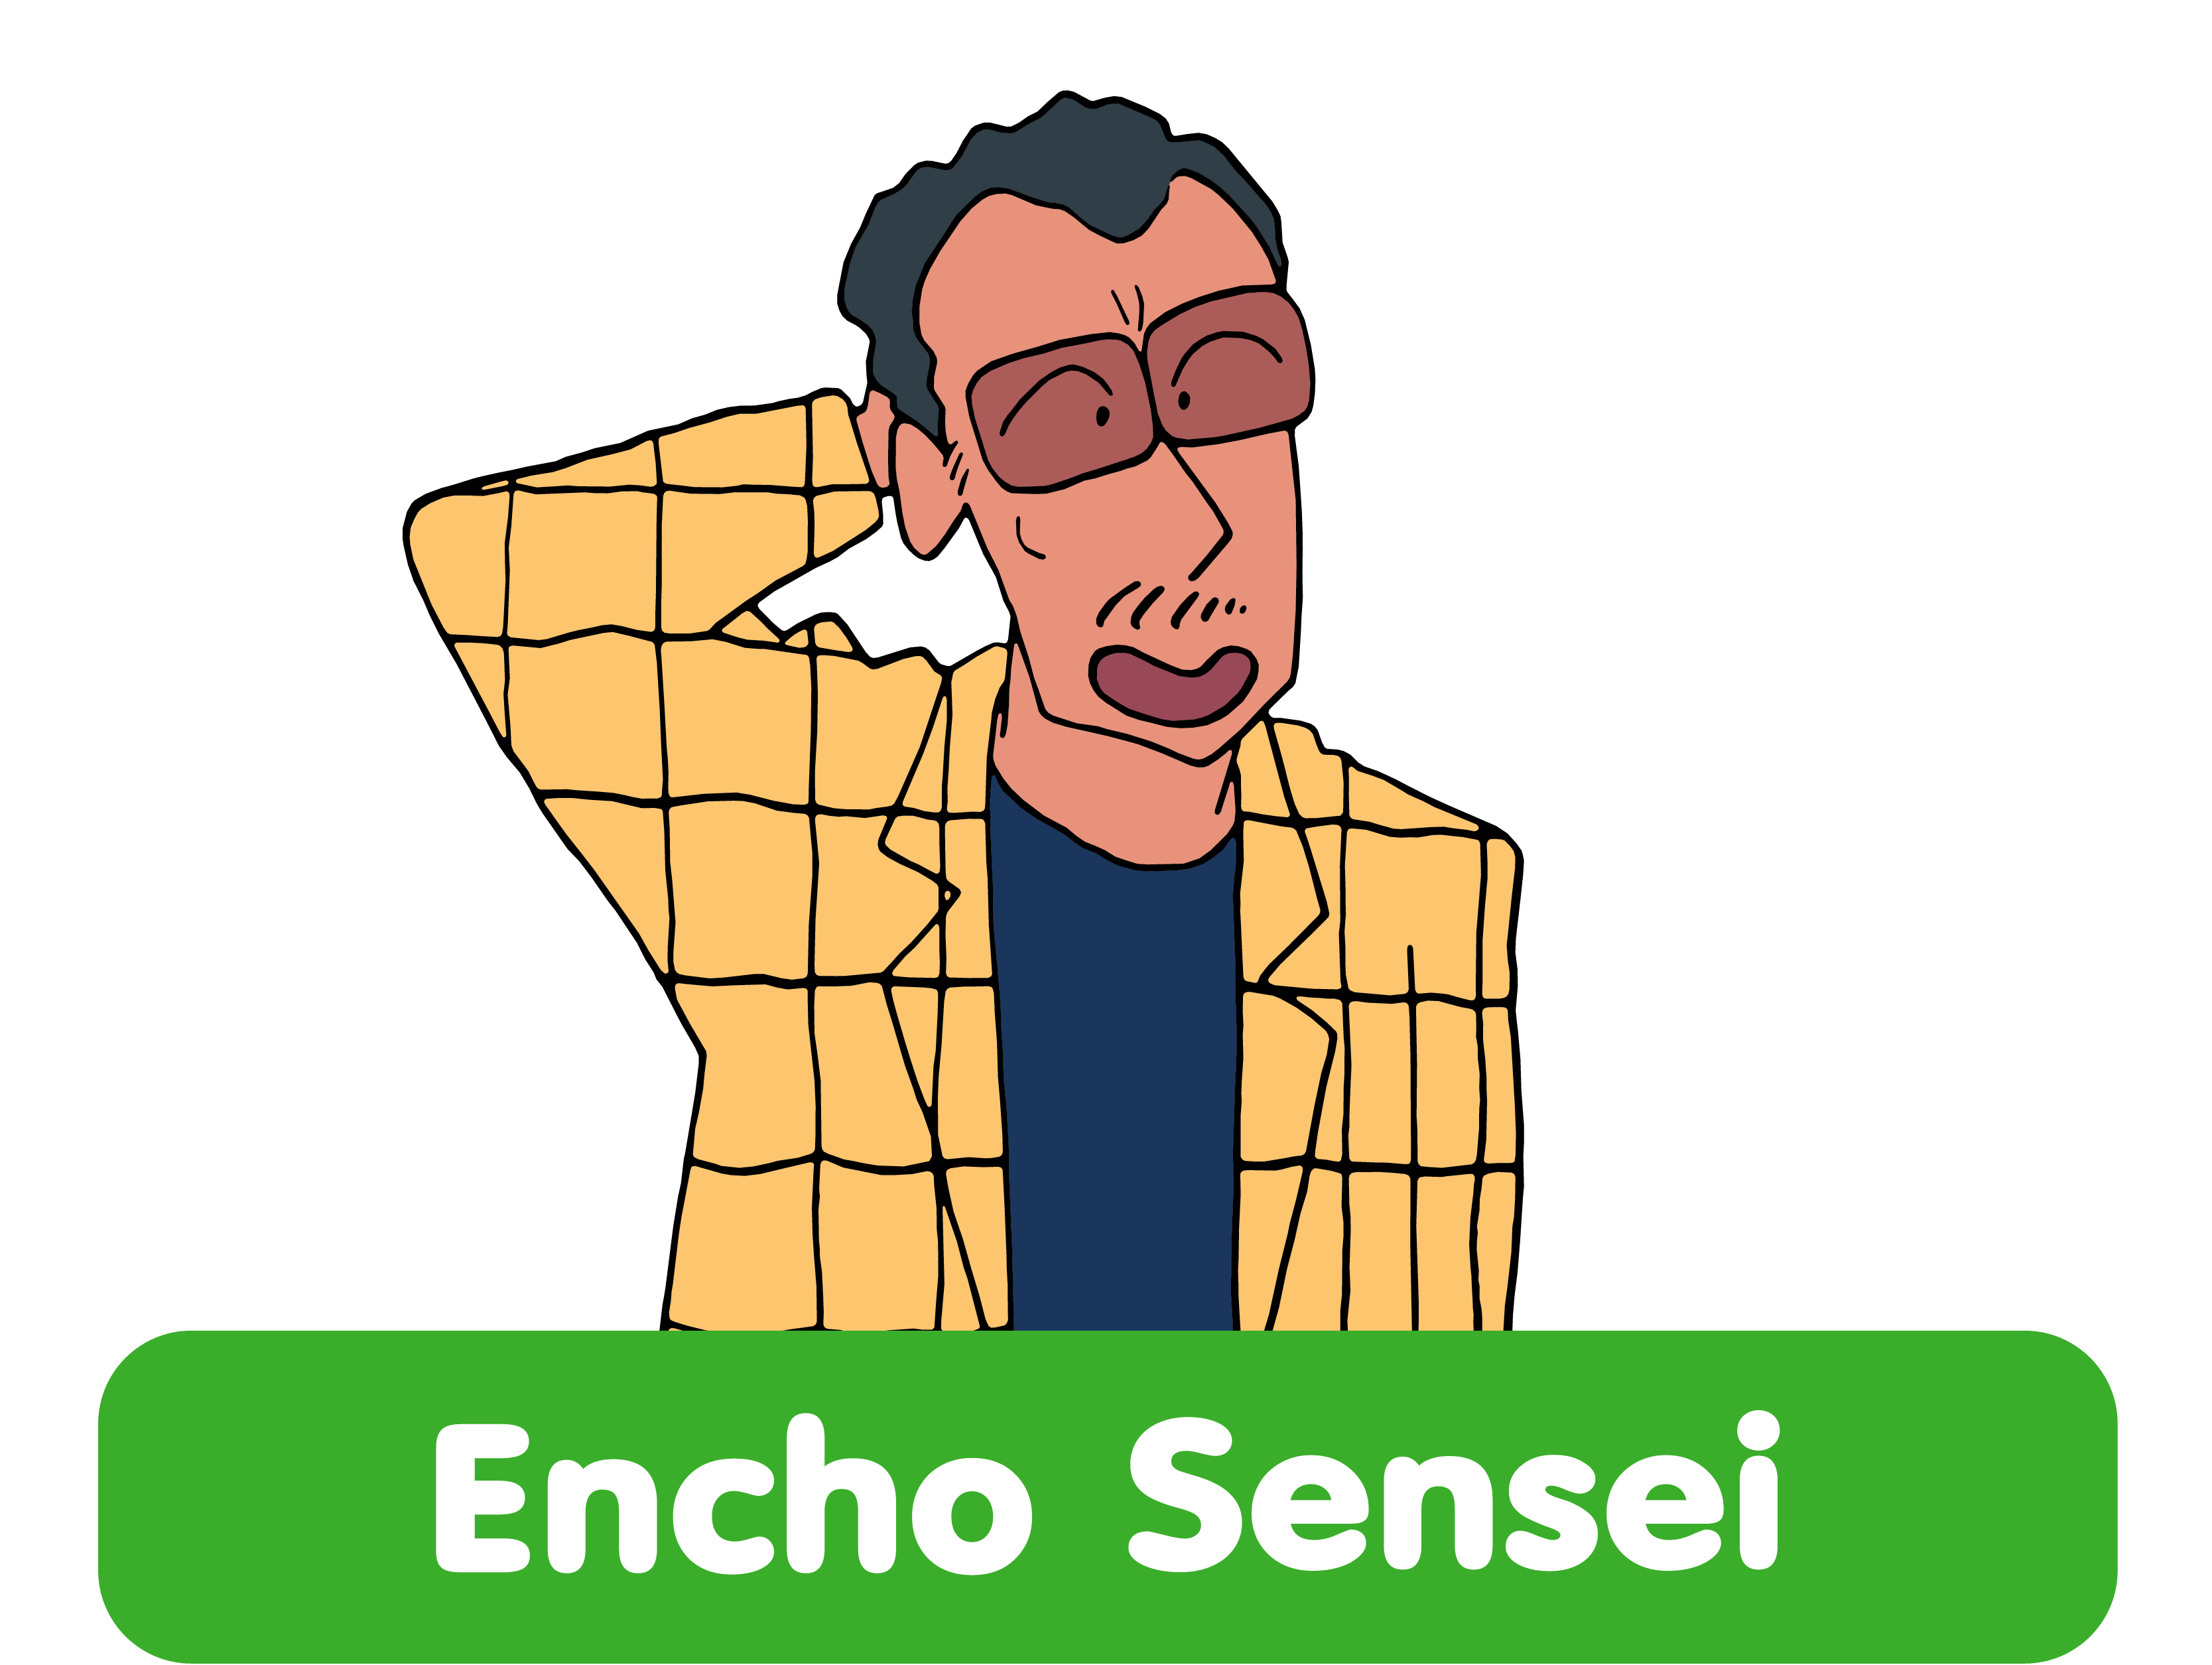 Encho Sensei